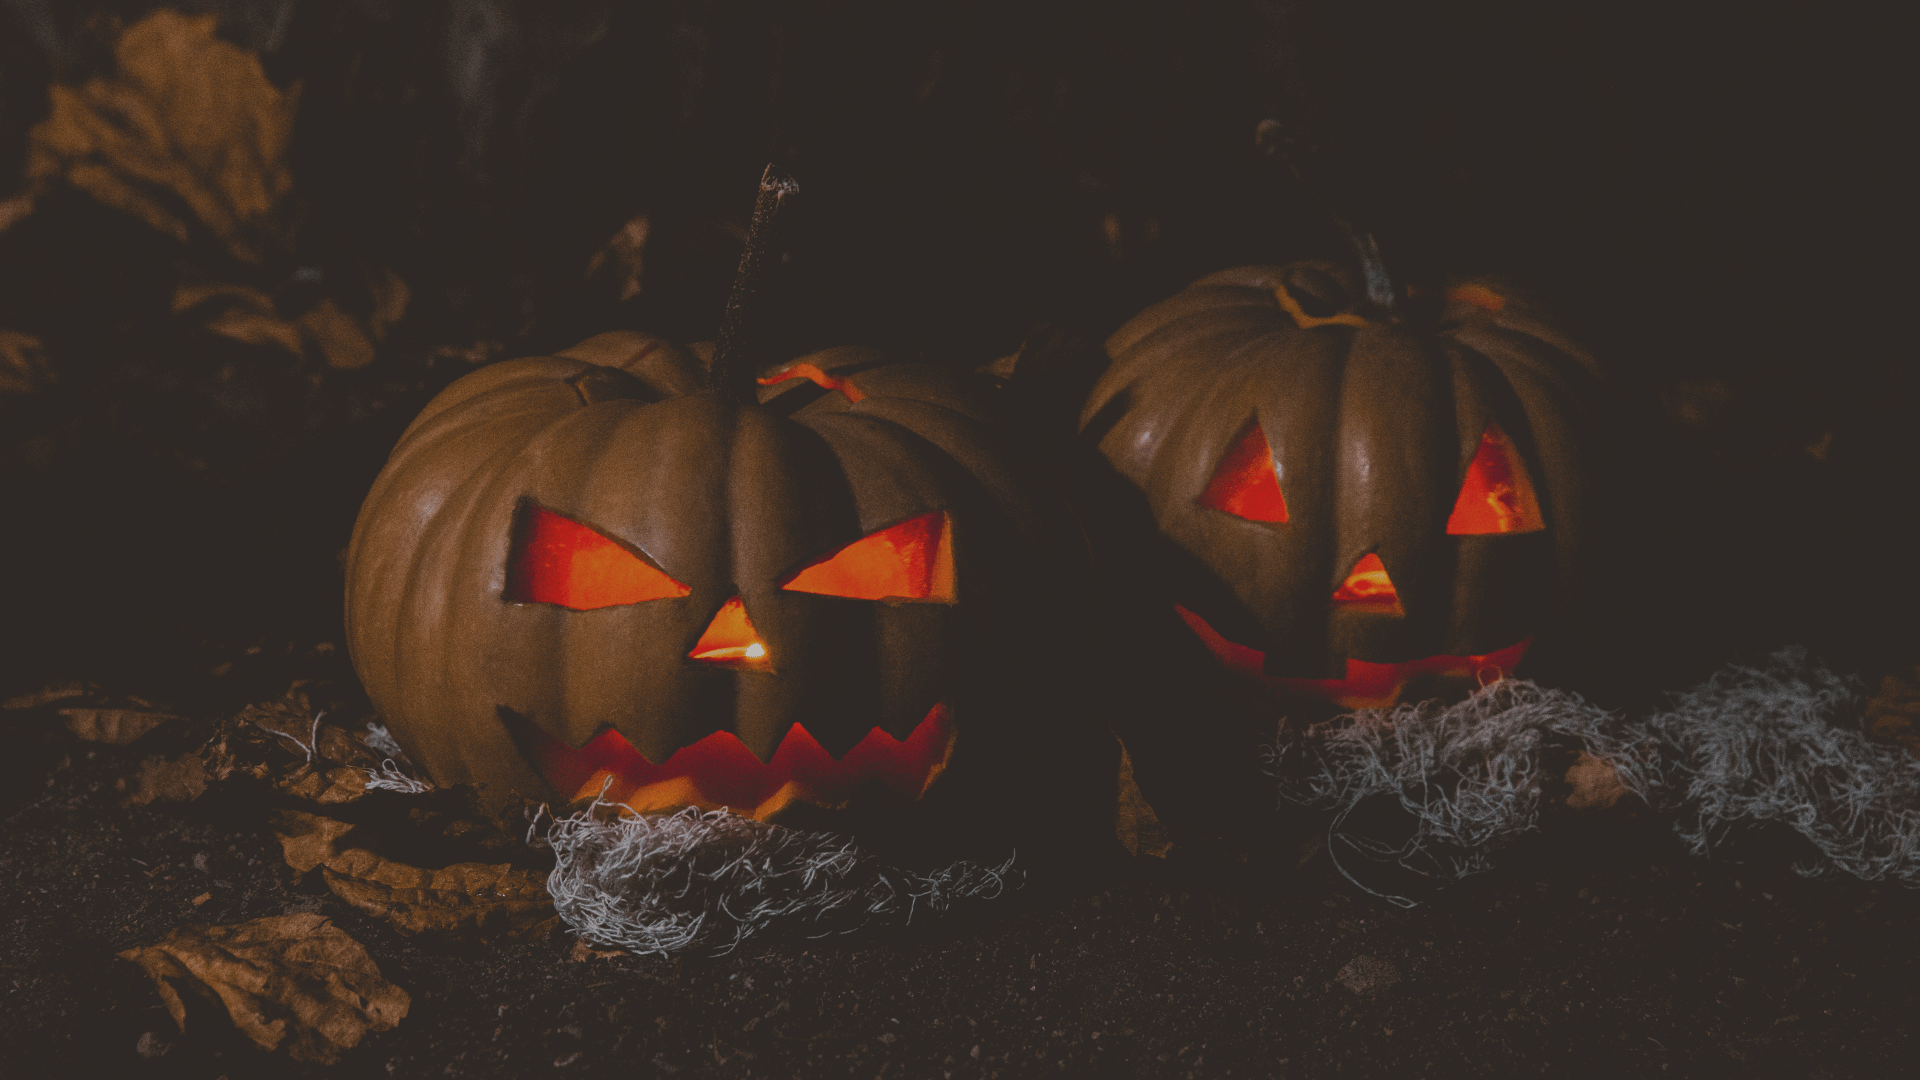 Two pumpkins with eyes lit up in the dark - Halloween desktop